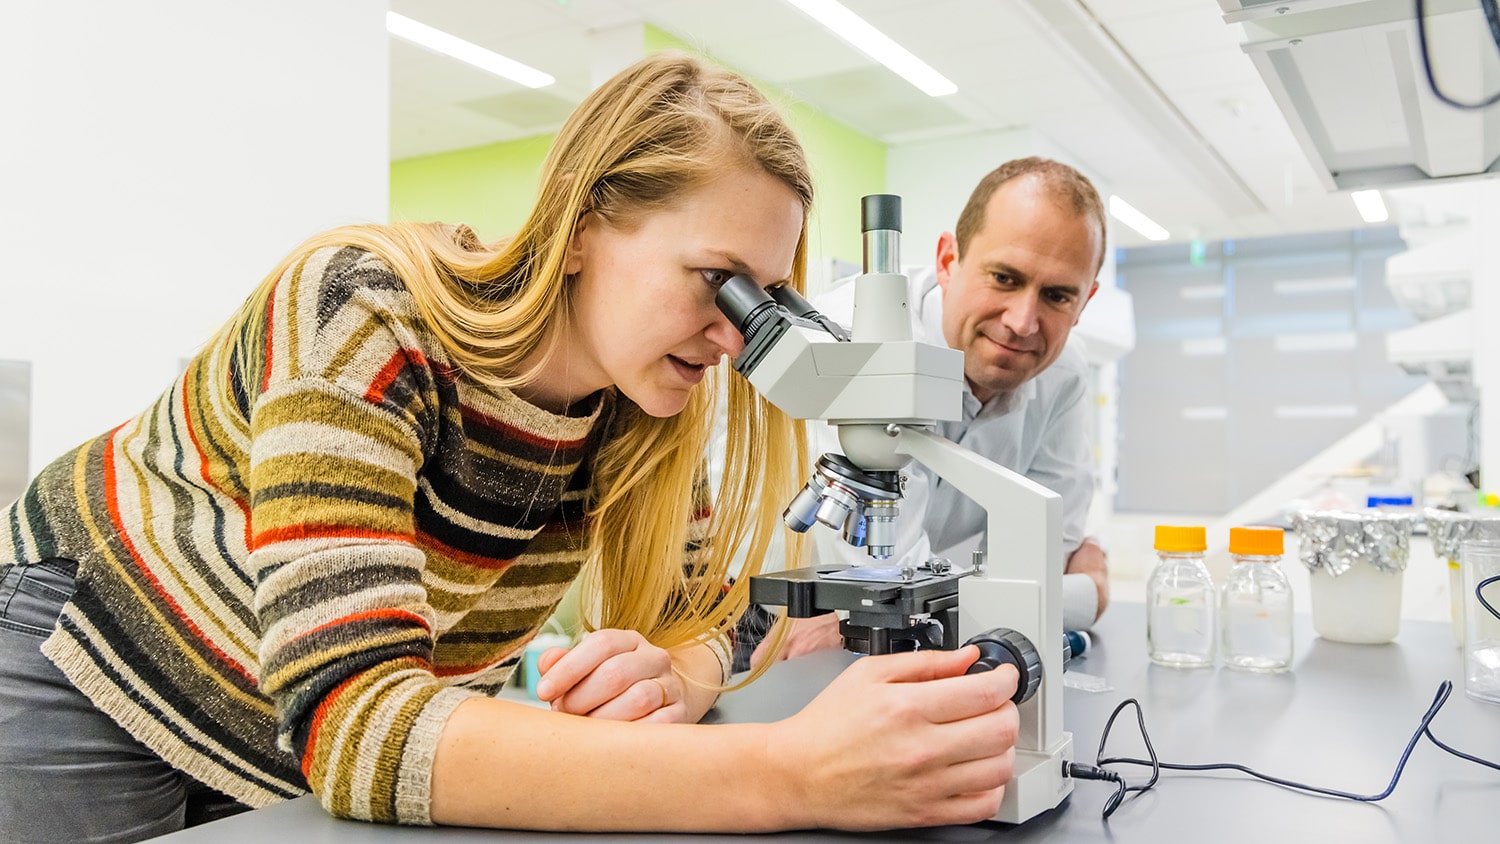 Postdoctoral researcher Lisa Van den Broeck, left, evaluates 3D bioprinted plant cells before STEPS Center director Jacob Jones, right, examines them.